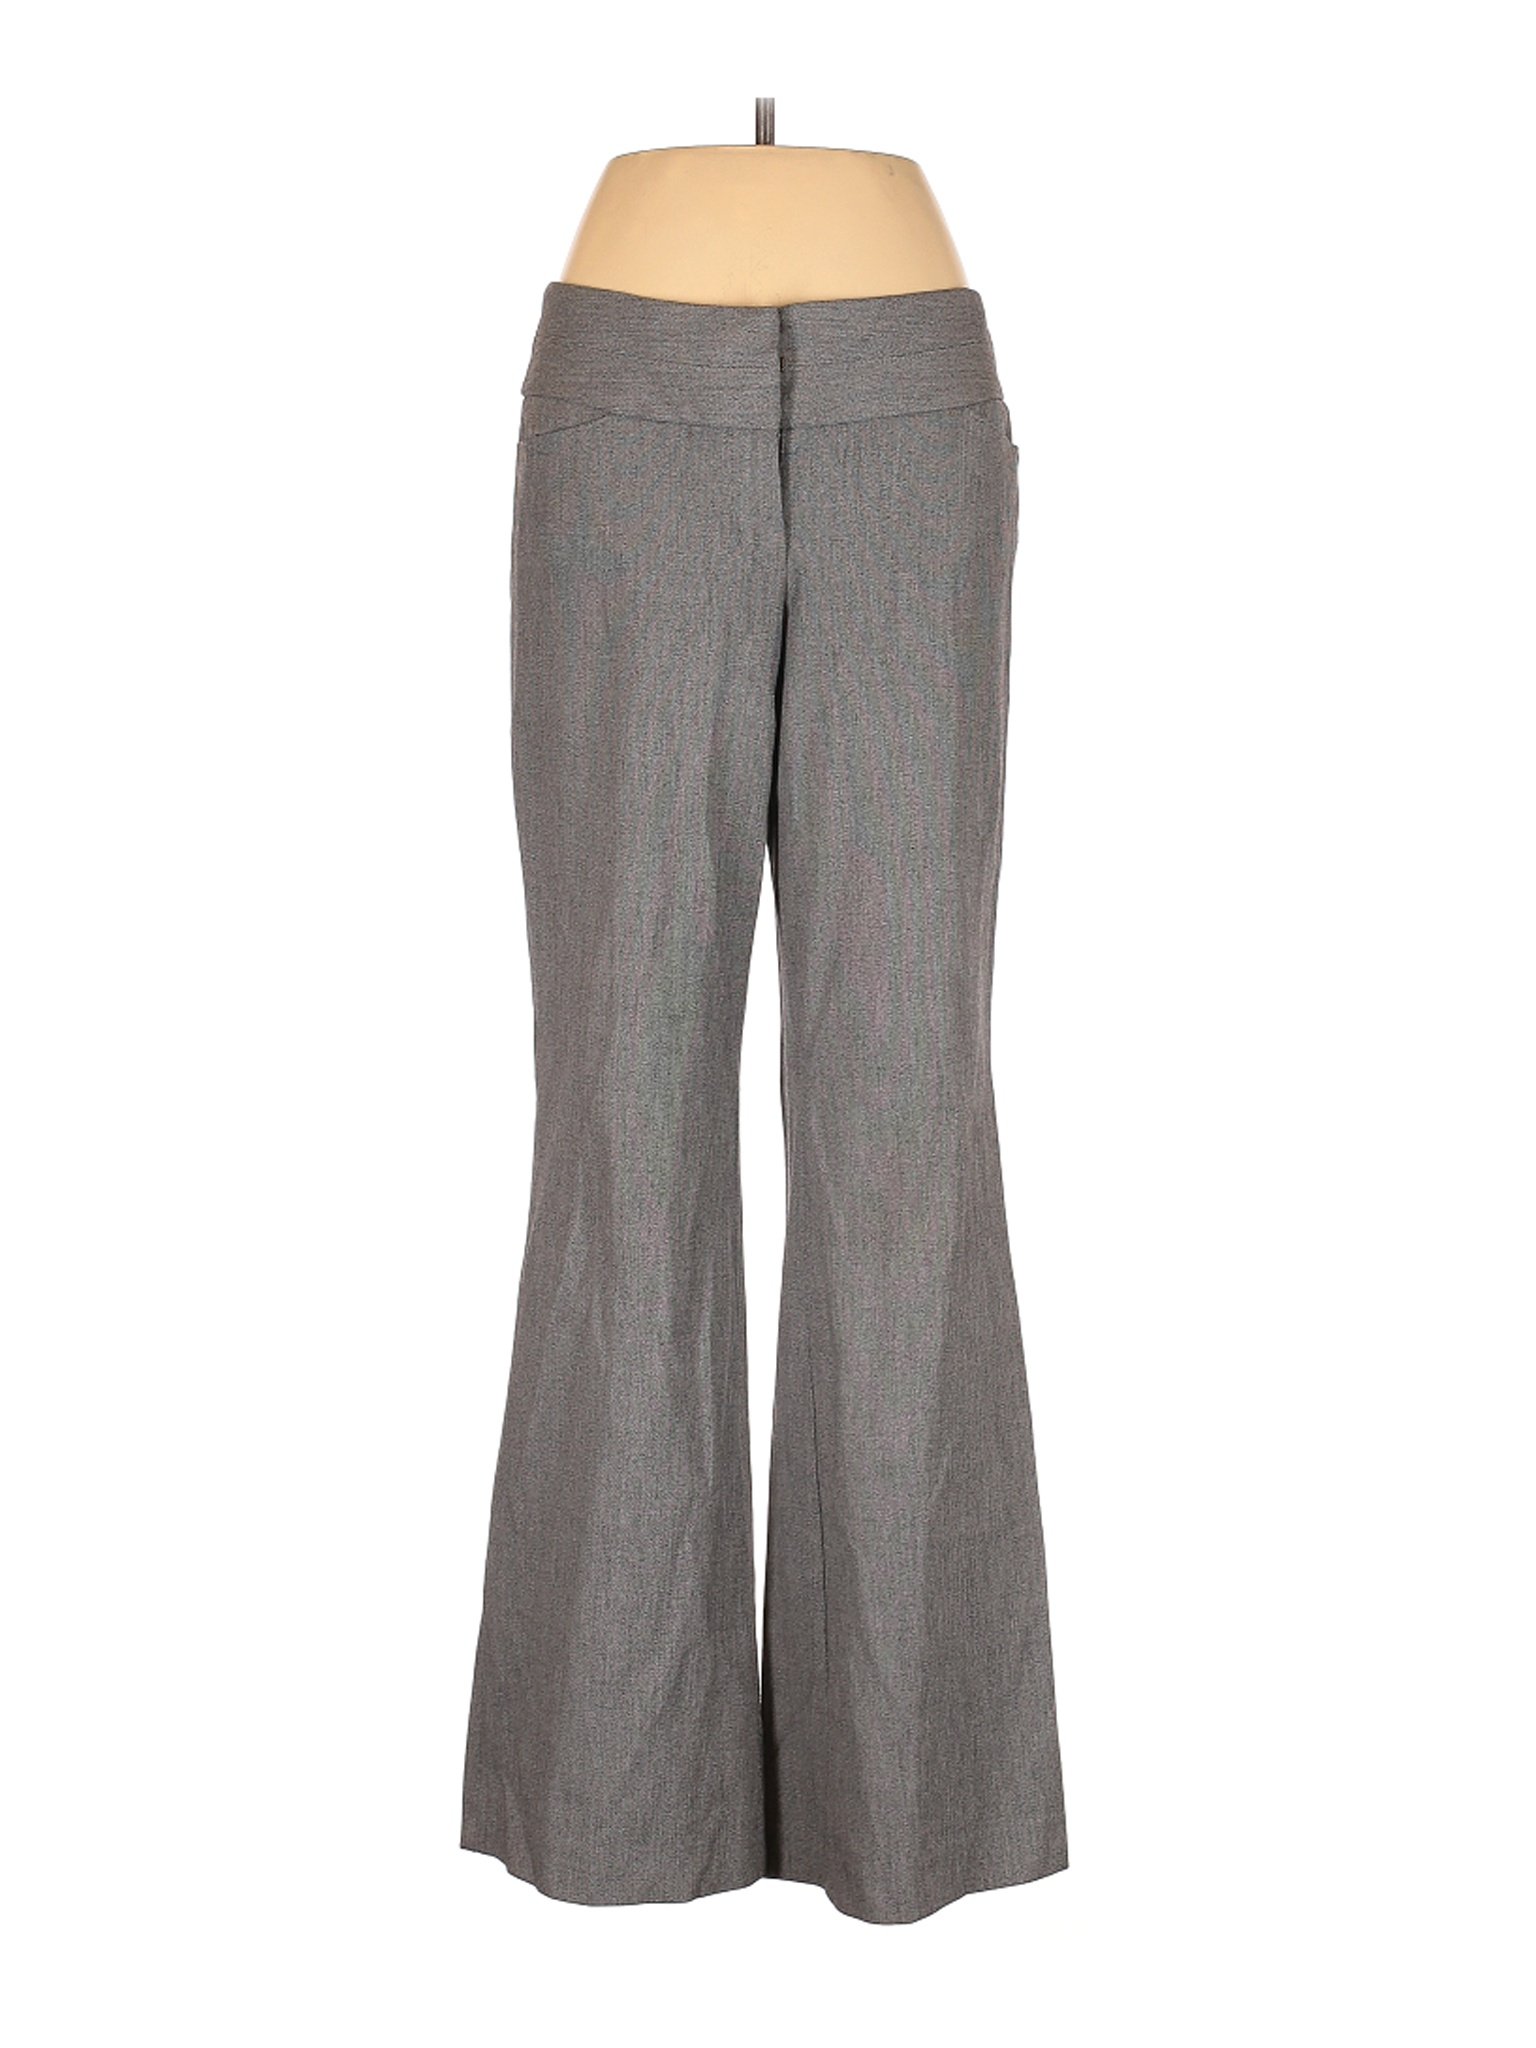 Express Women Gray Dress Pants 8 | eBay